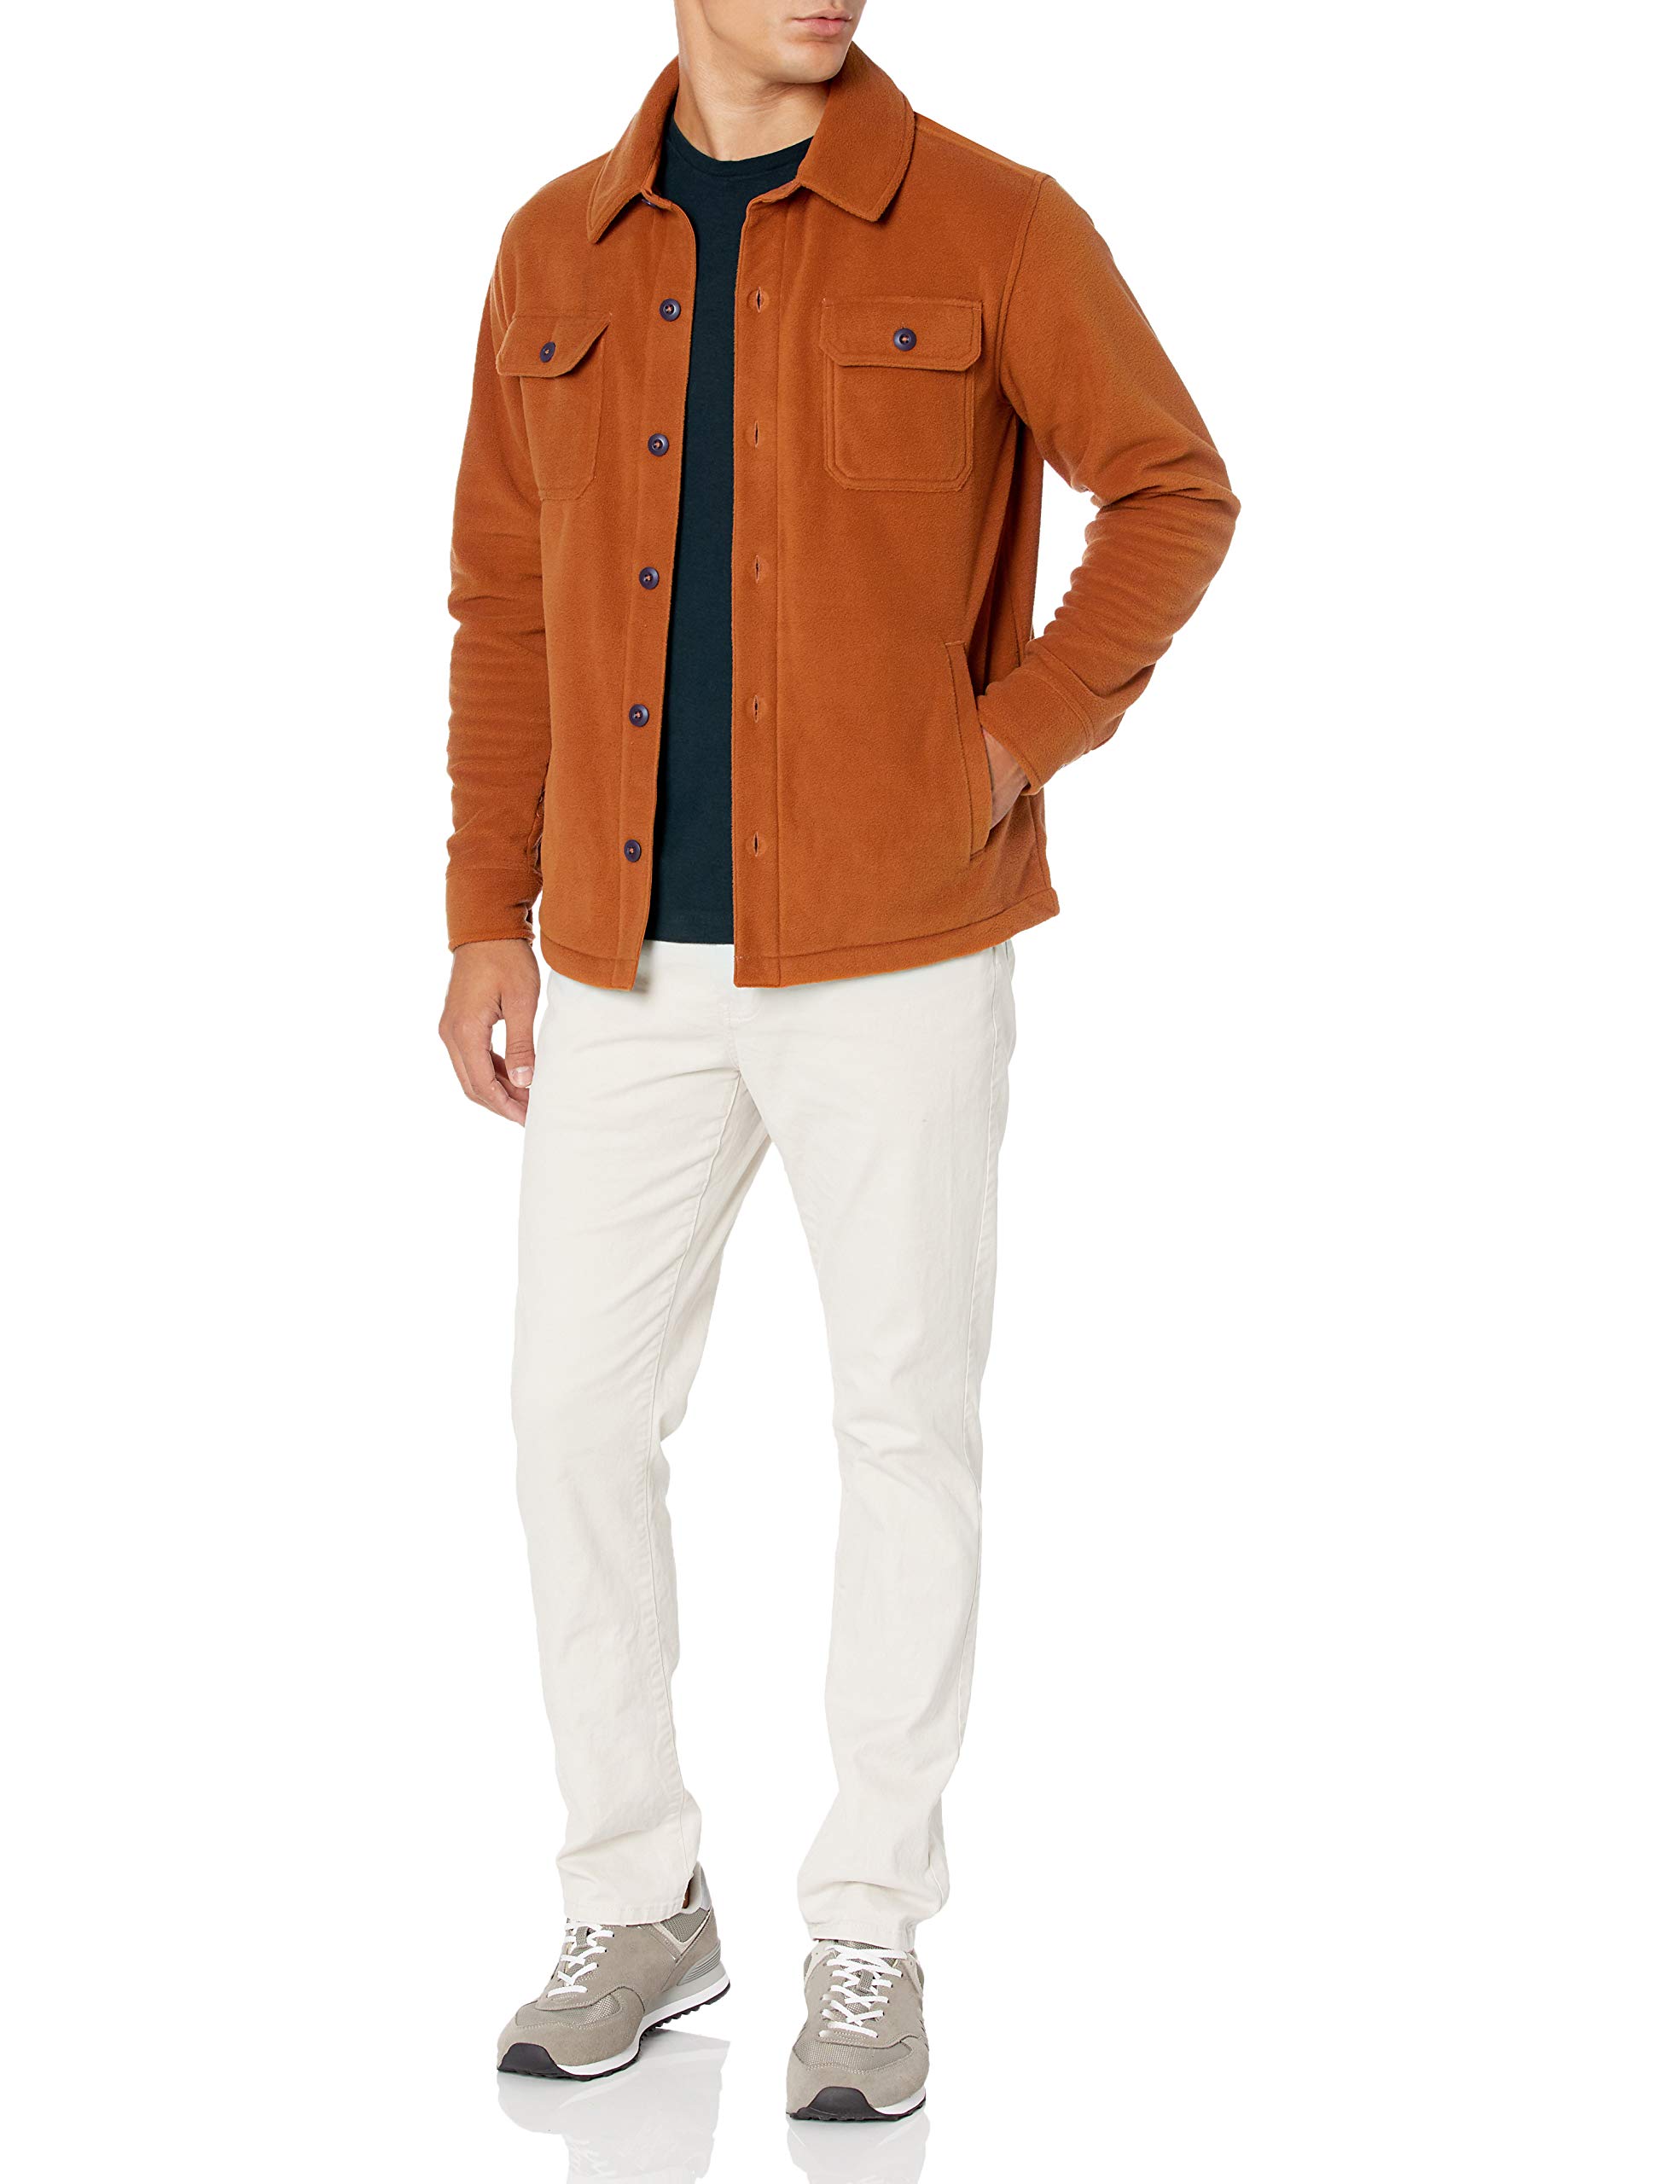 Amazon Essentials Men's Long-Sleeve Polar Fleece Shirt Jacket